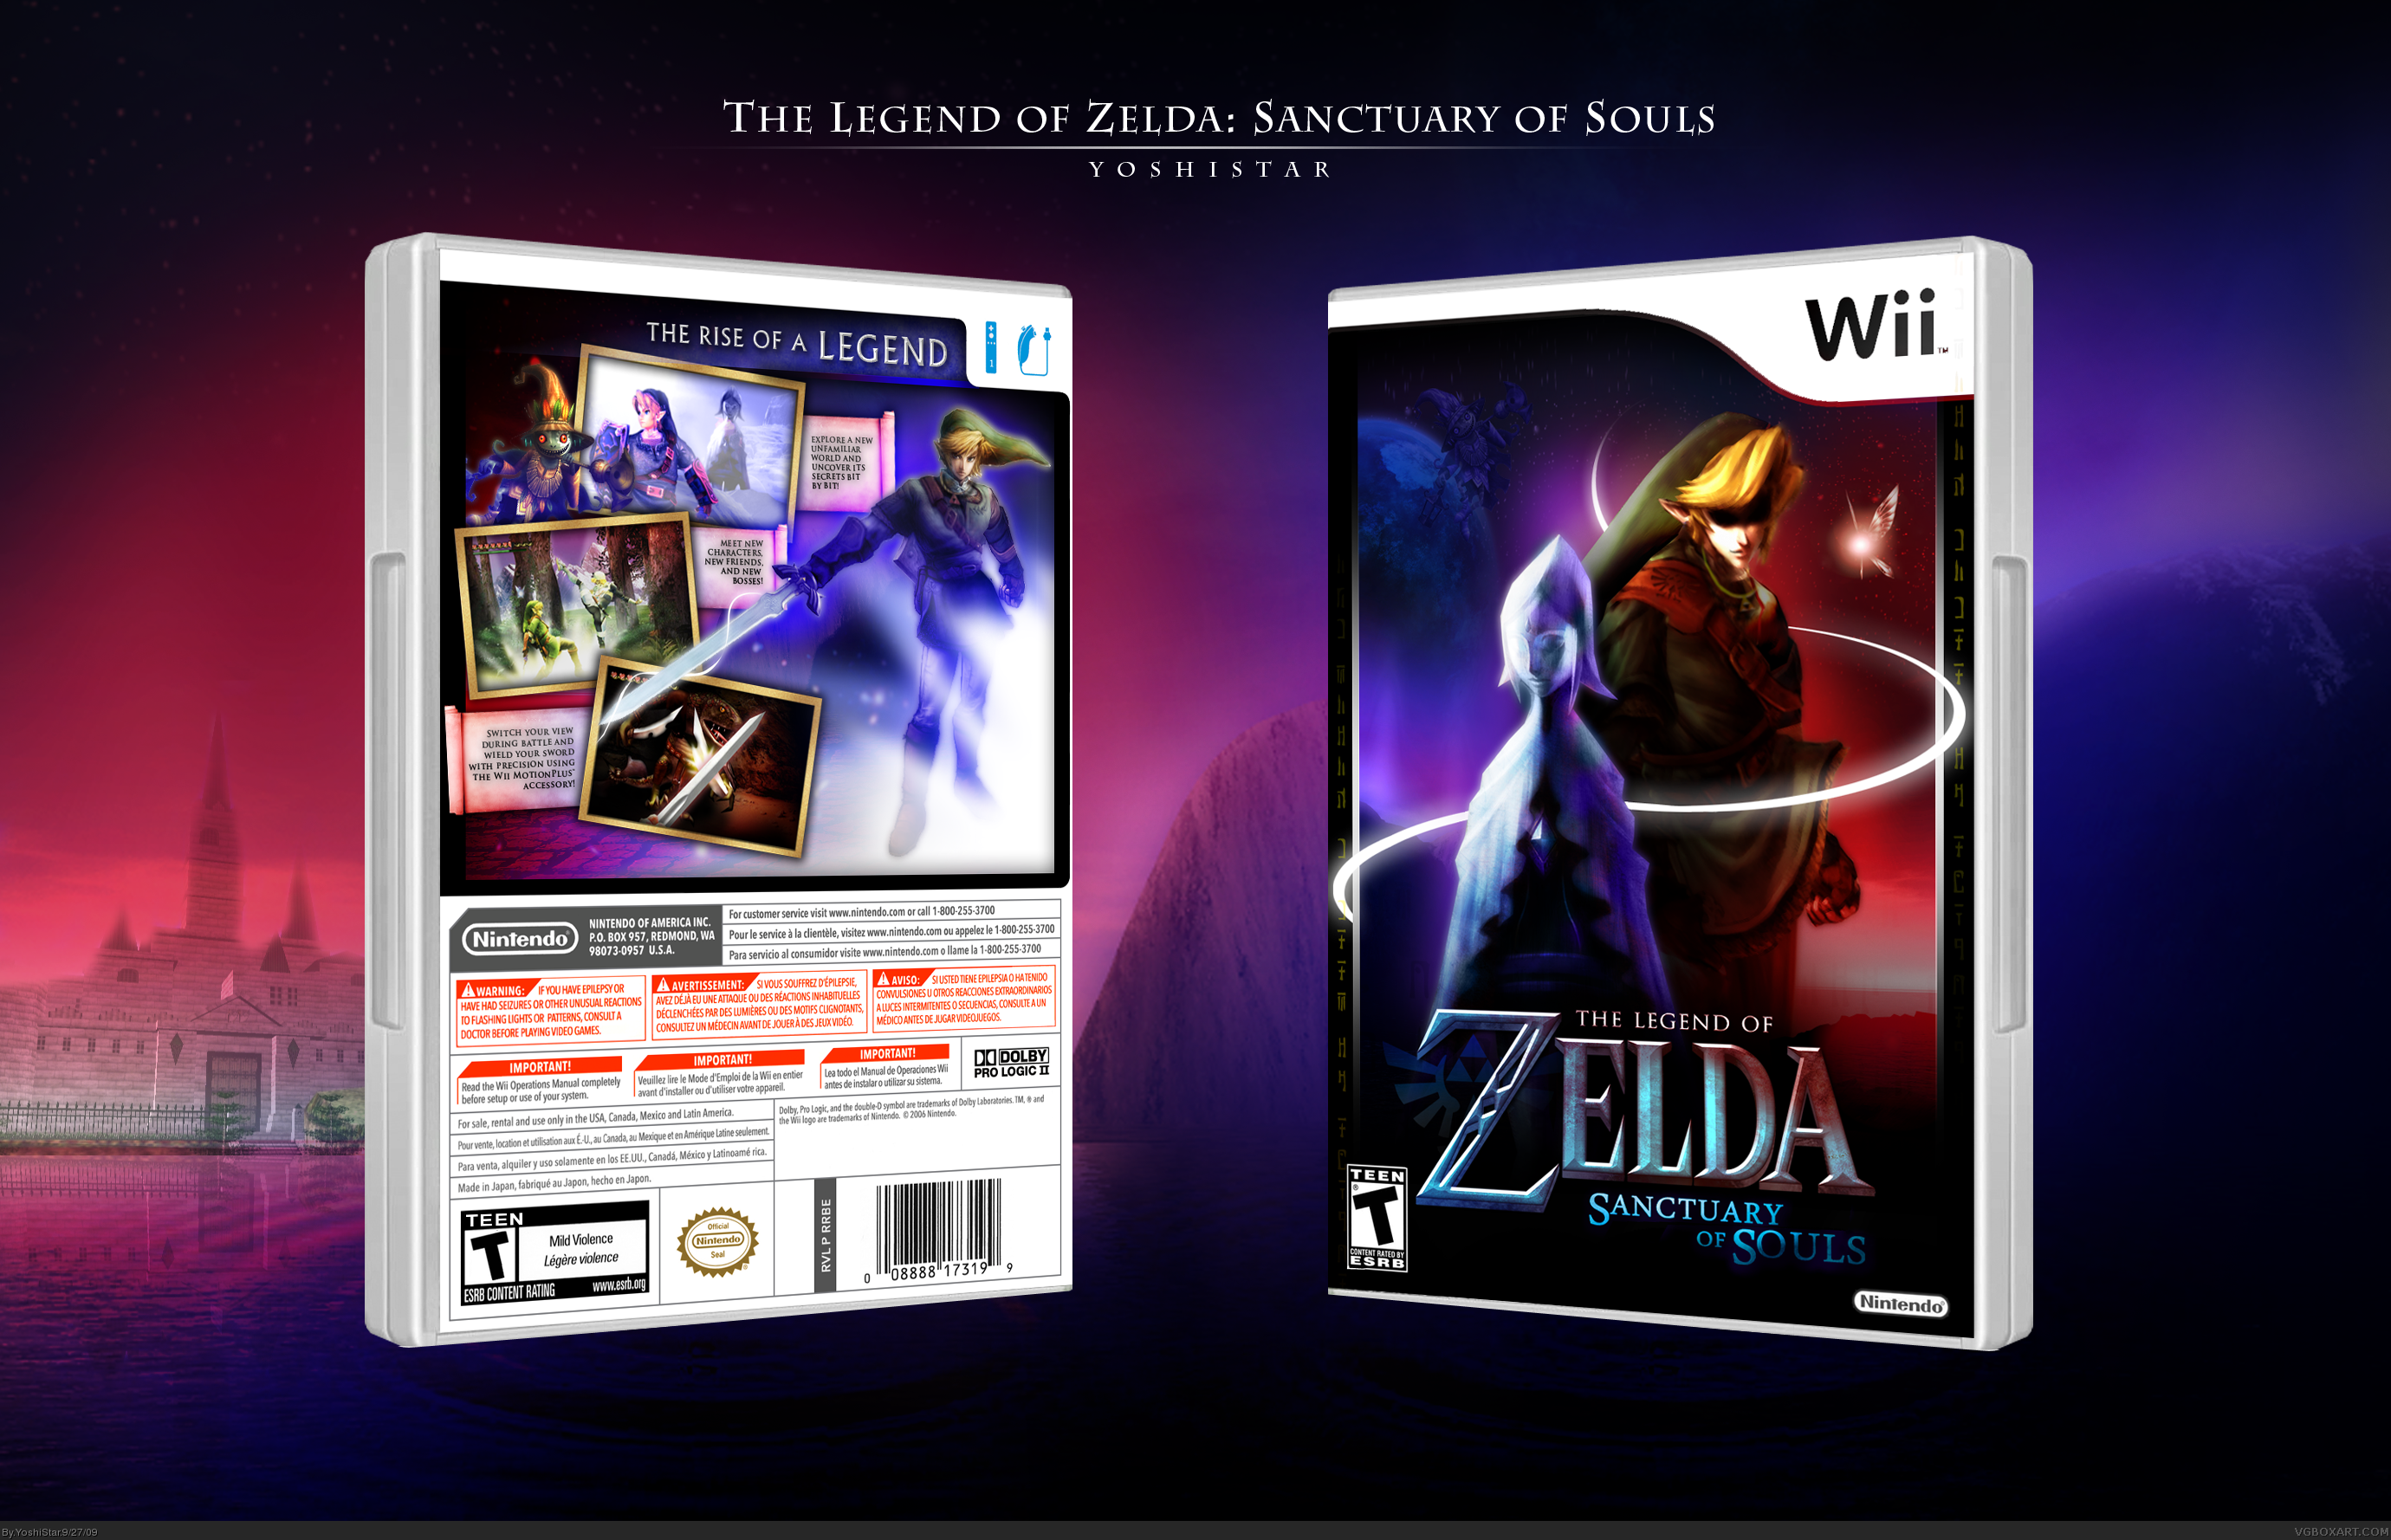 The Legend of Zelda: Sanctuary of Souls box cover